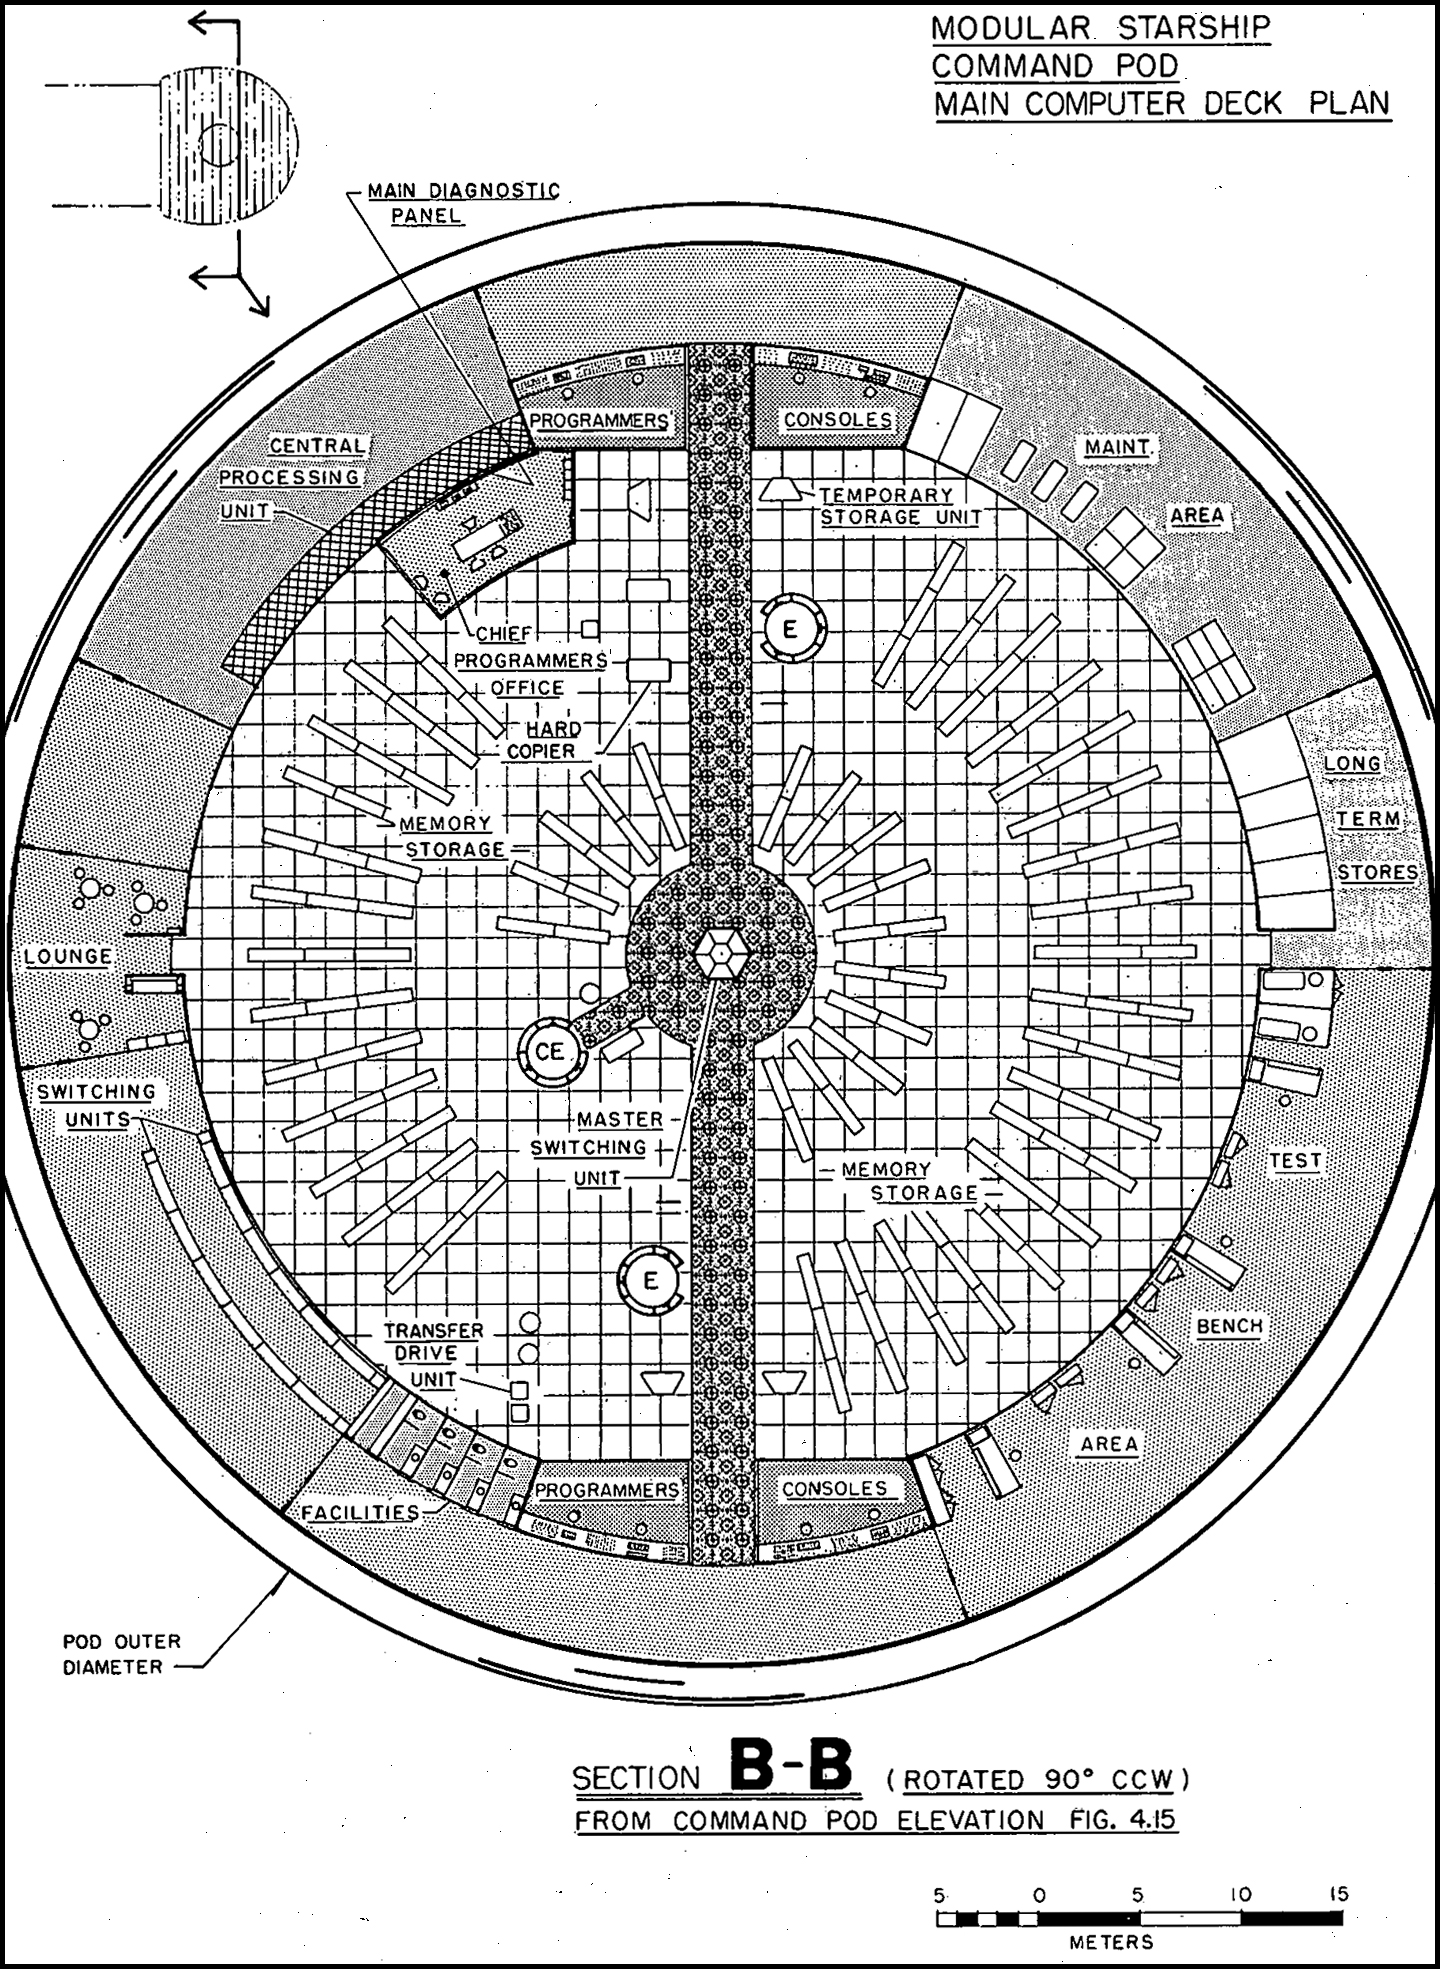 Fig-4.17-GAILE Starship-Main Computer Deck Plan